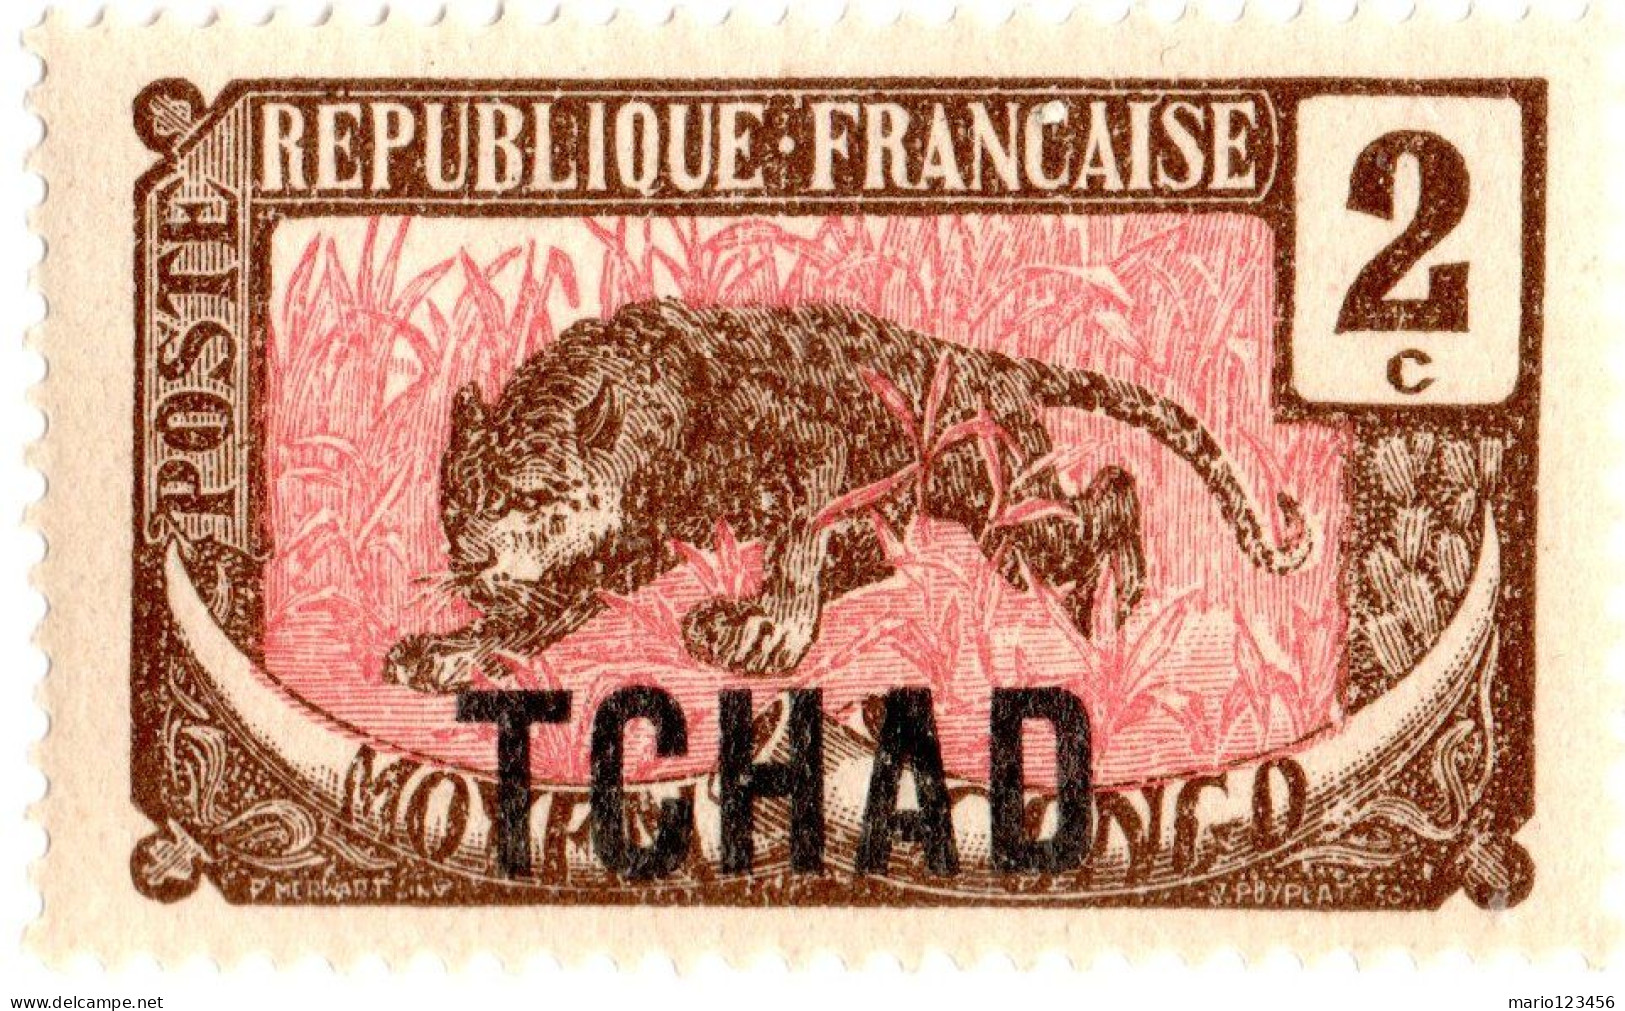 CIAD, CHAD, FAUNA, LEOPARDO, 2 C., 1922, FRANCOBOLLI NUOVI (MLH*) Scott:TD 2, Yt:TD 2 - Unused Stamps